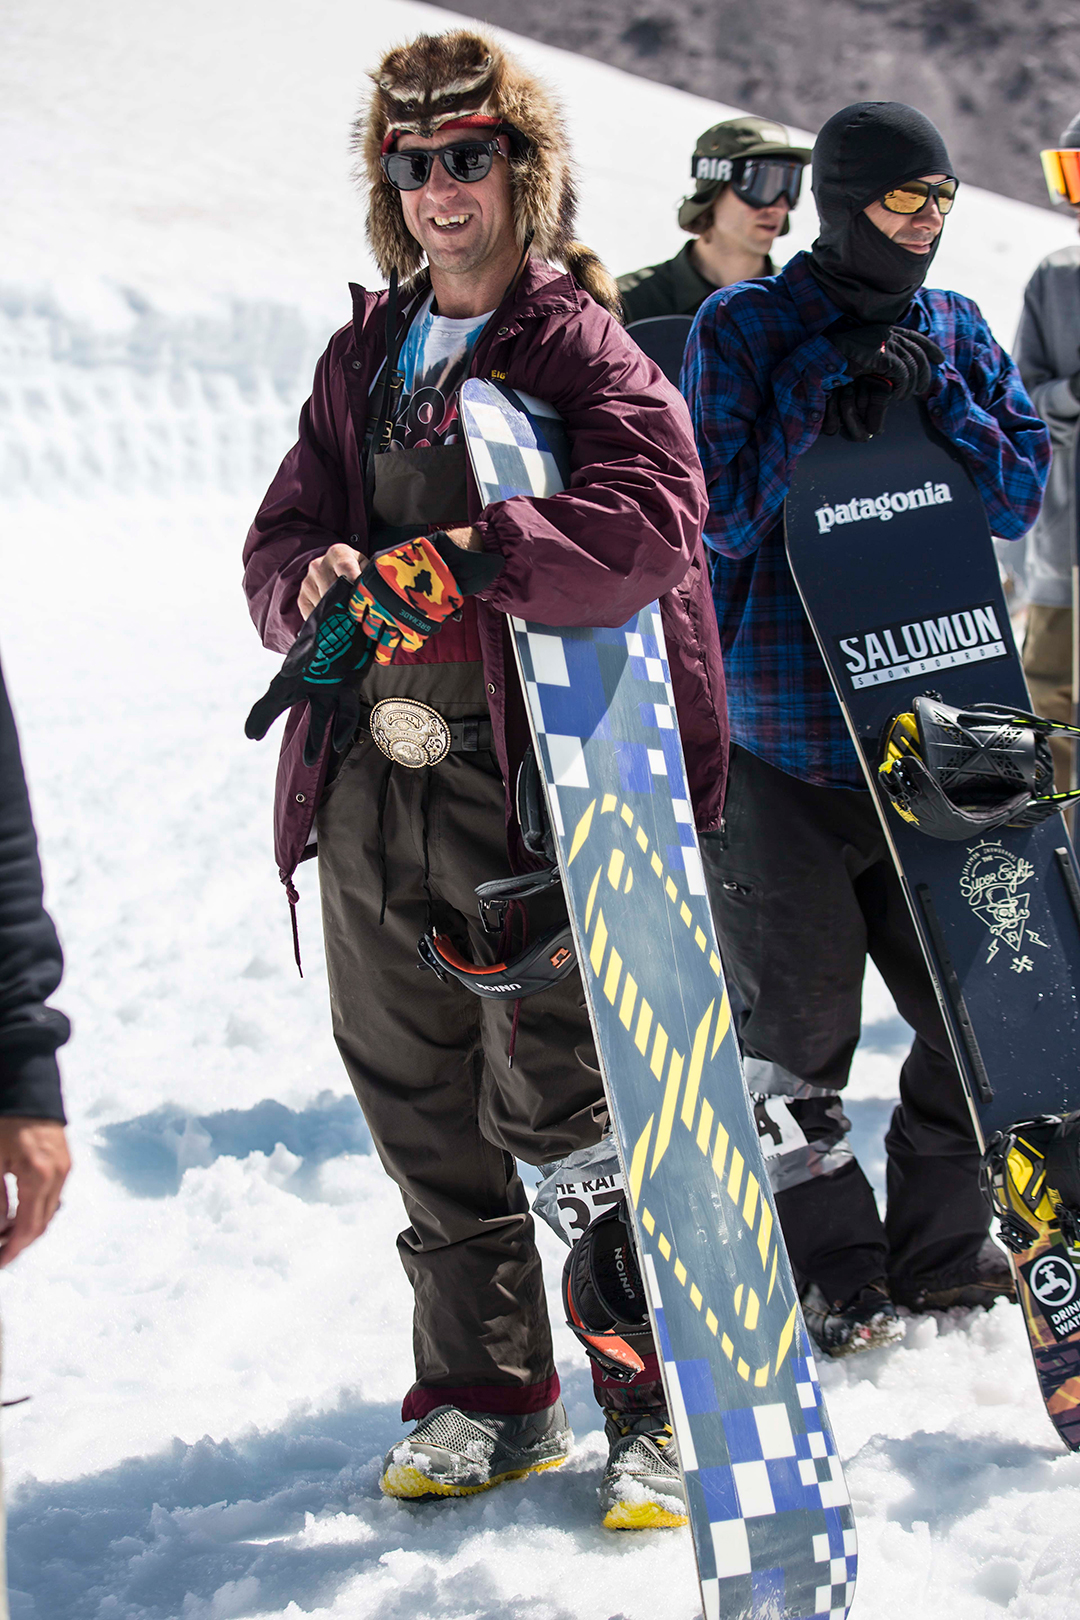 Drink Water Rat Race 2015 Snowboarding Austin Smith Bryan Fox